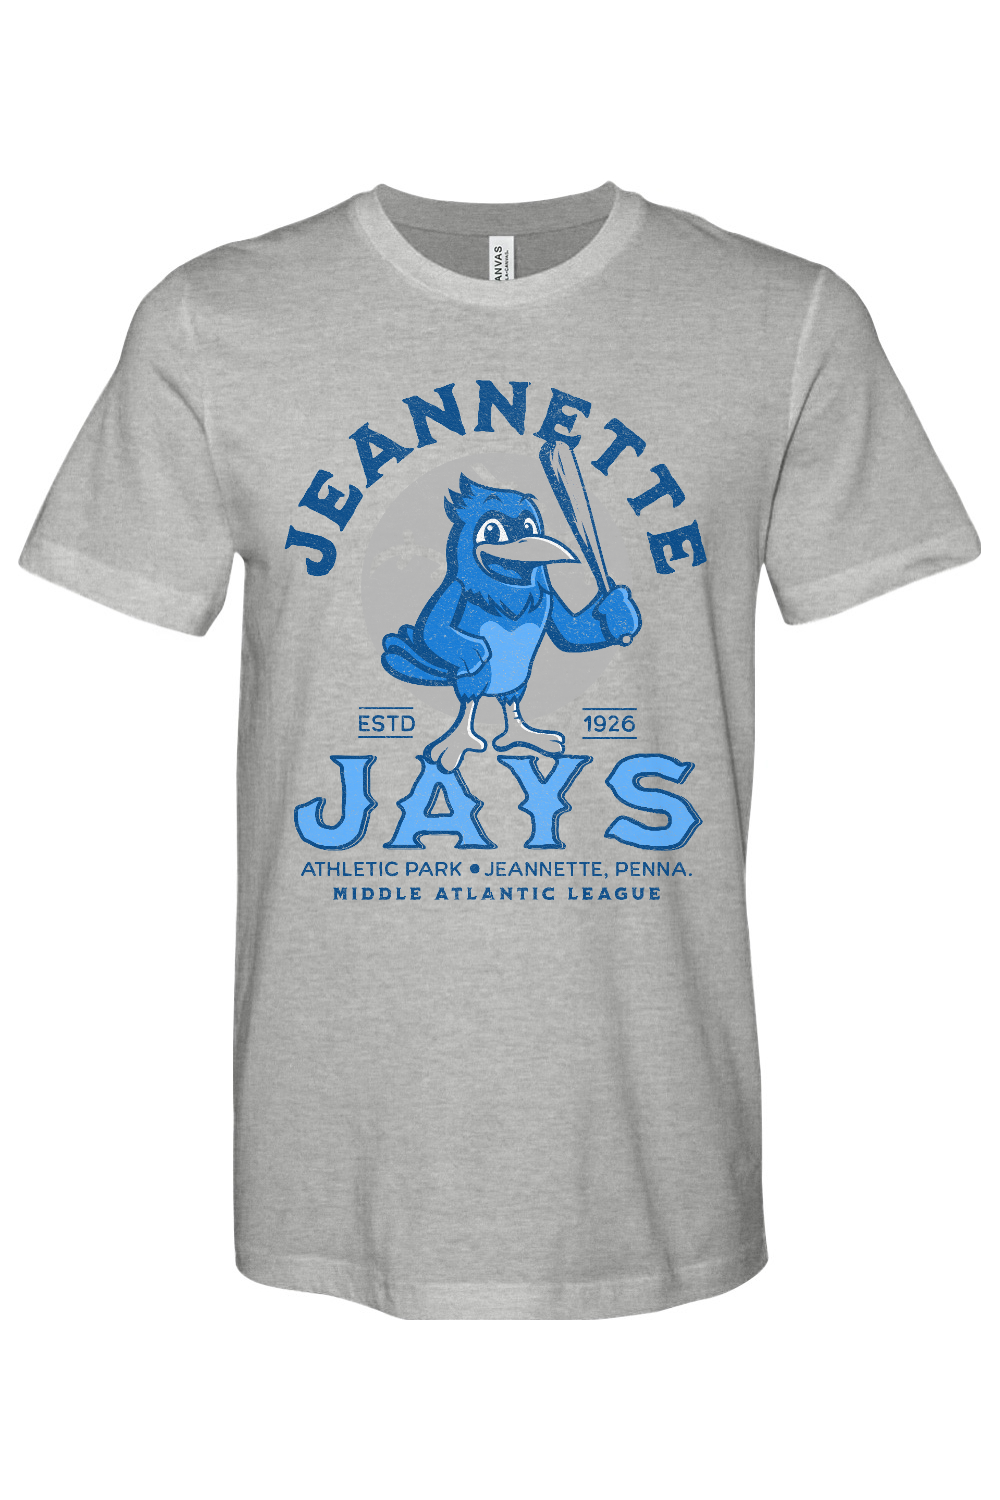 Jeannette Jays Baseball - 1926 - Jeannette, PA - Yinzylvania